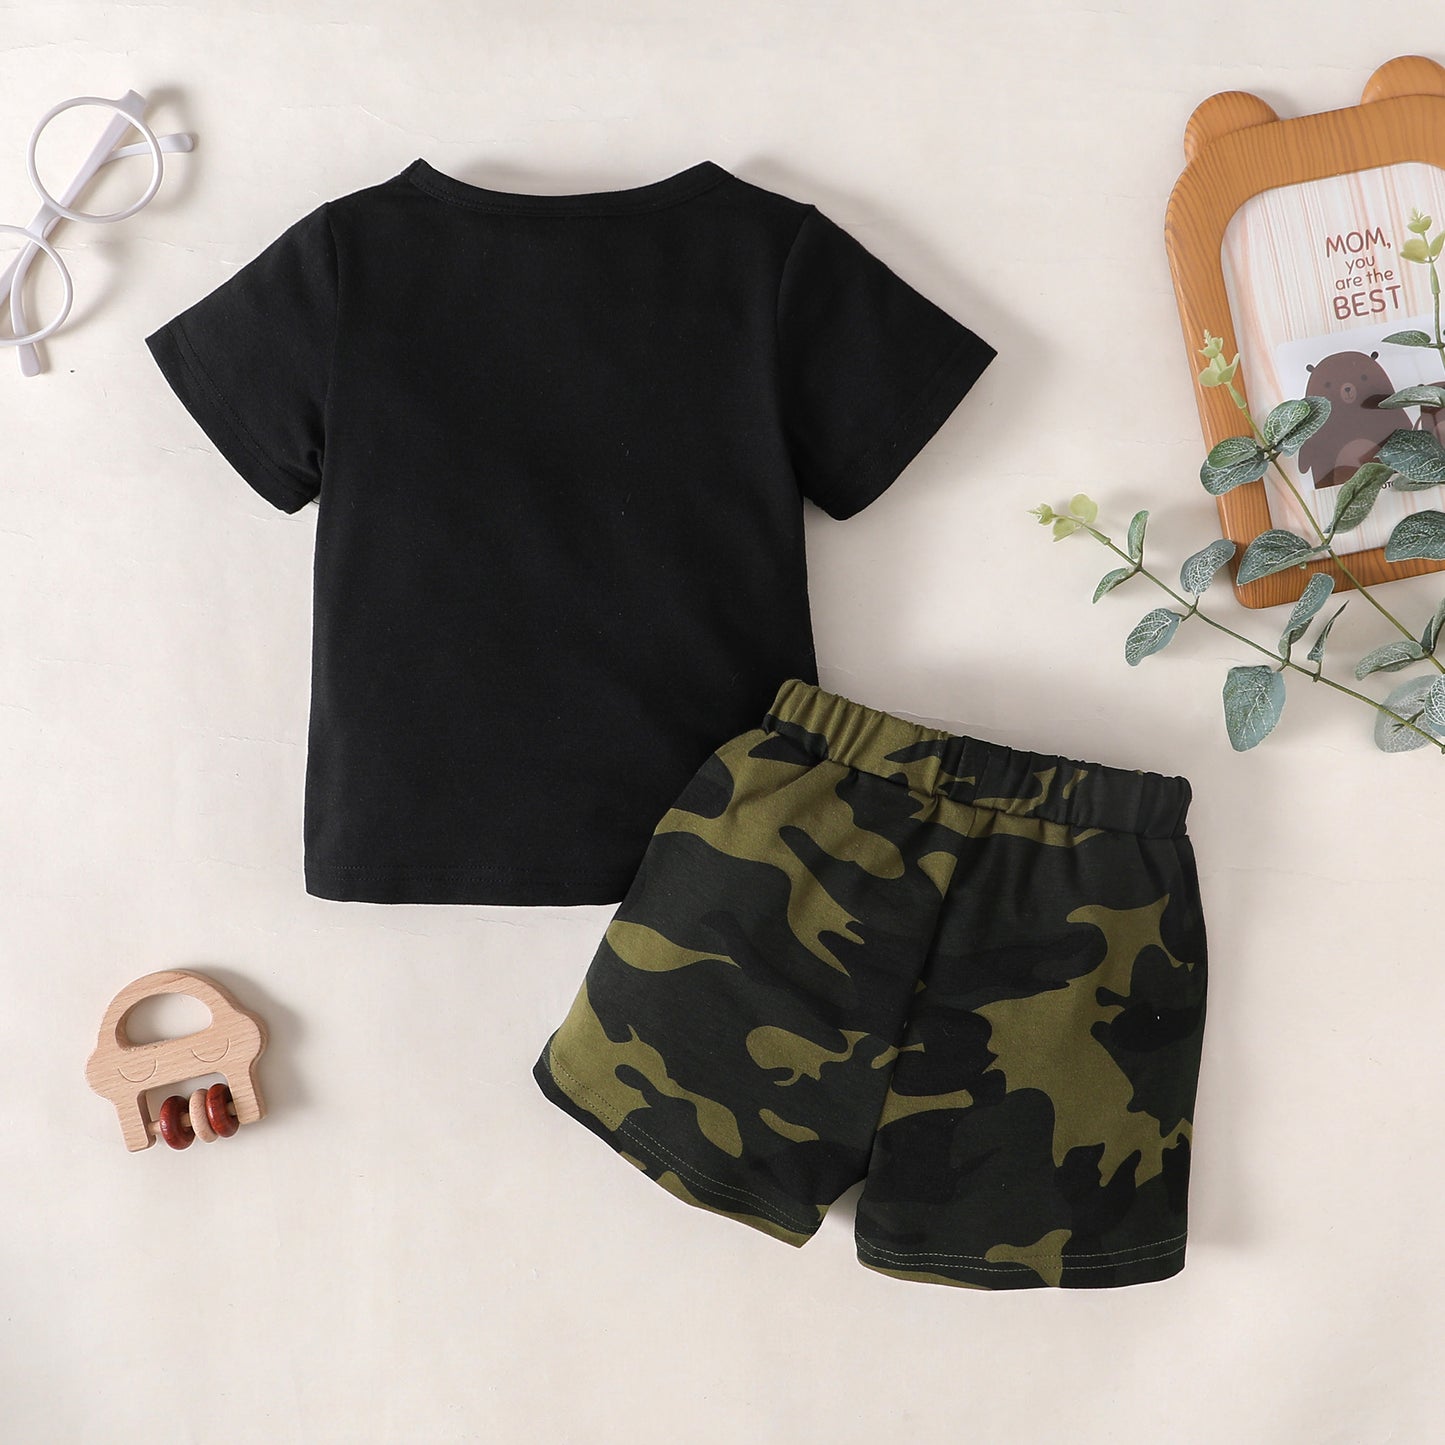 MAMA'S BOY Graphic T-Shirt Camouflage Shorts Set